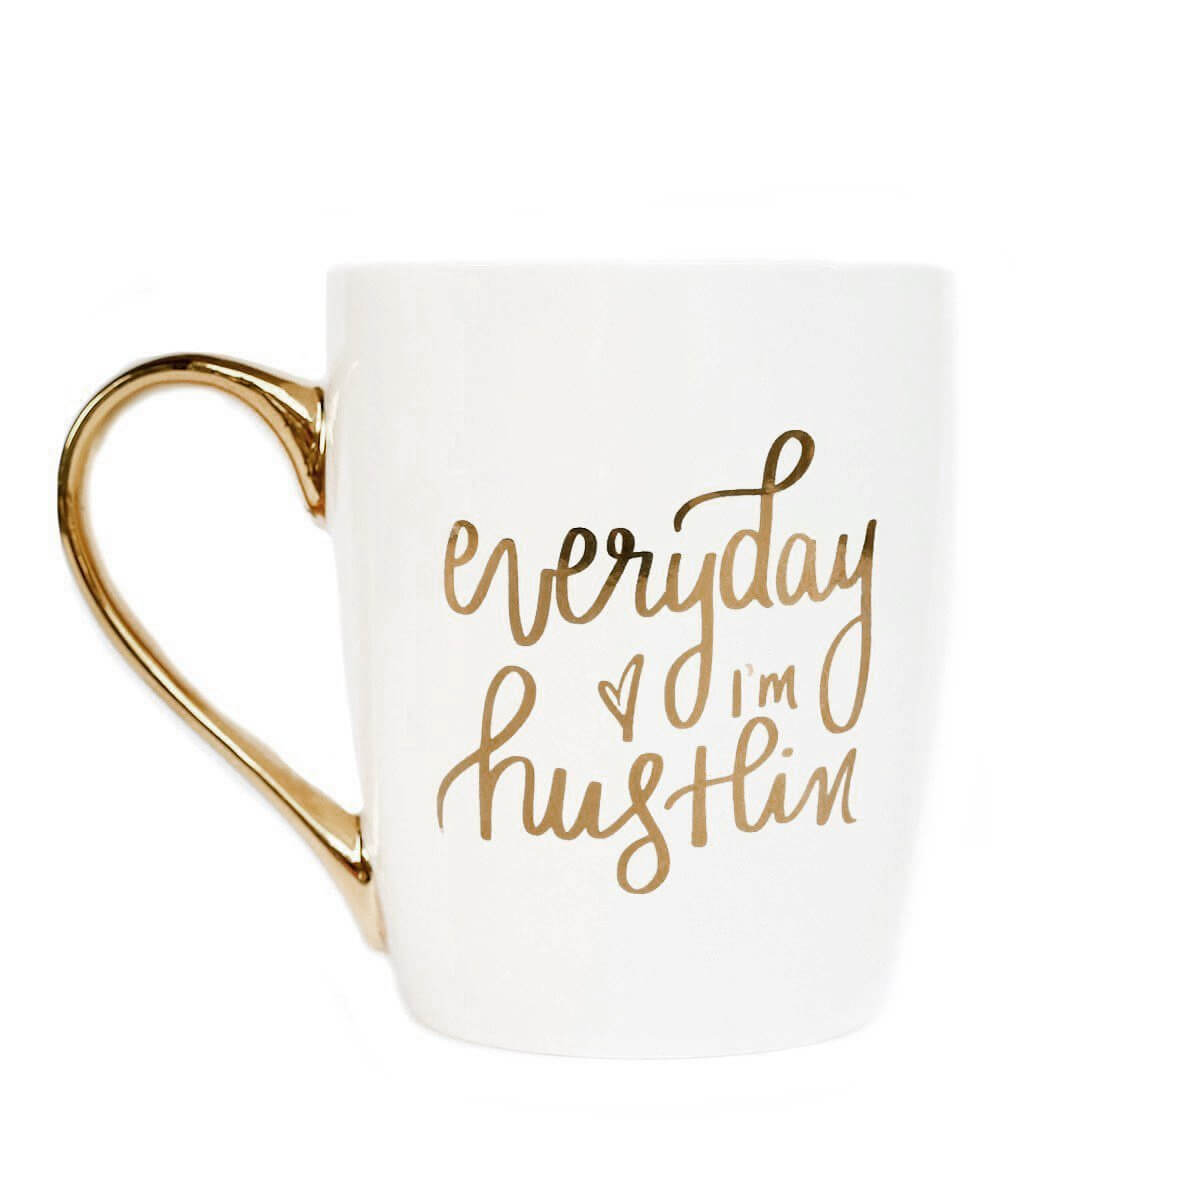 Everyday I'm Hustlin' Coffee Mug (white and gold)